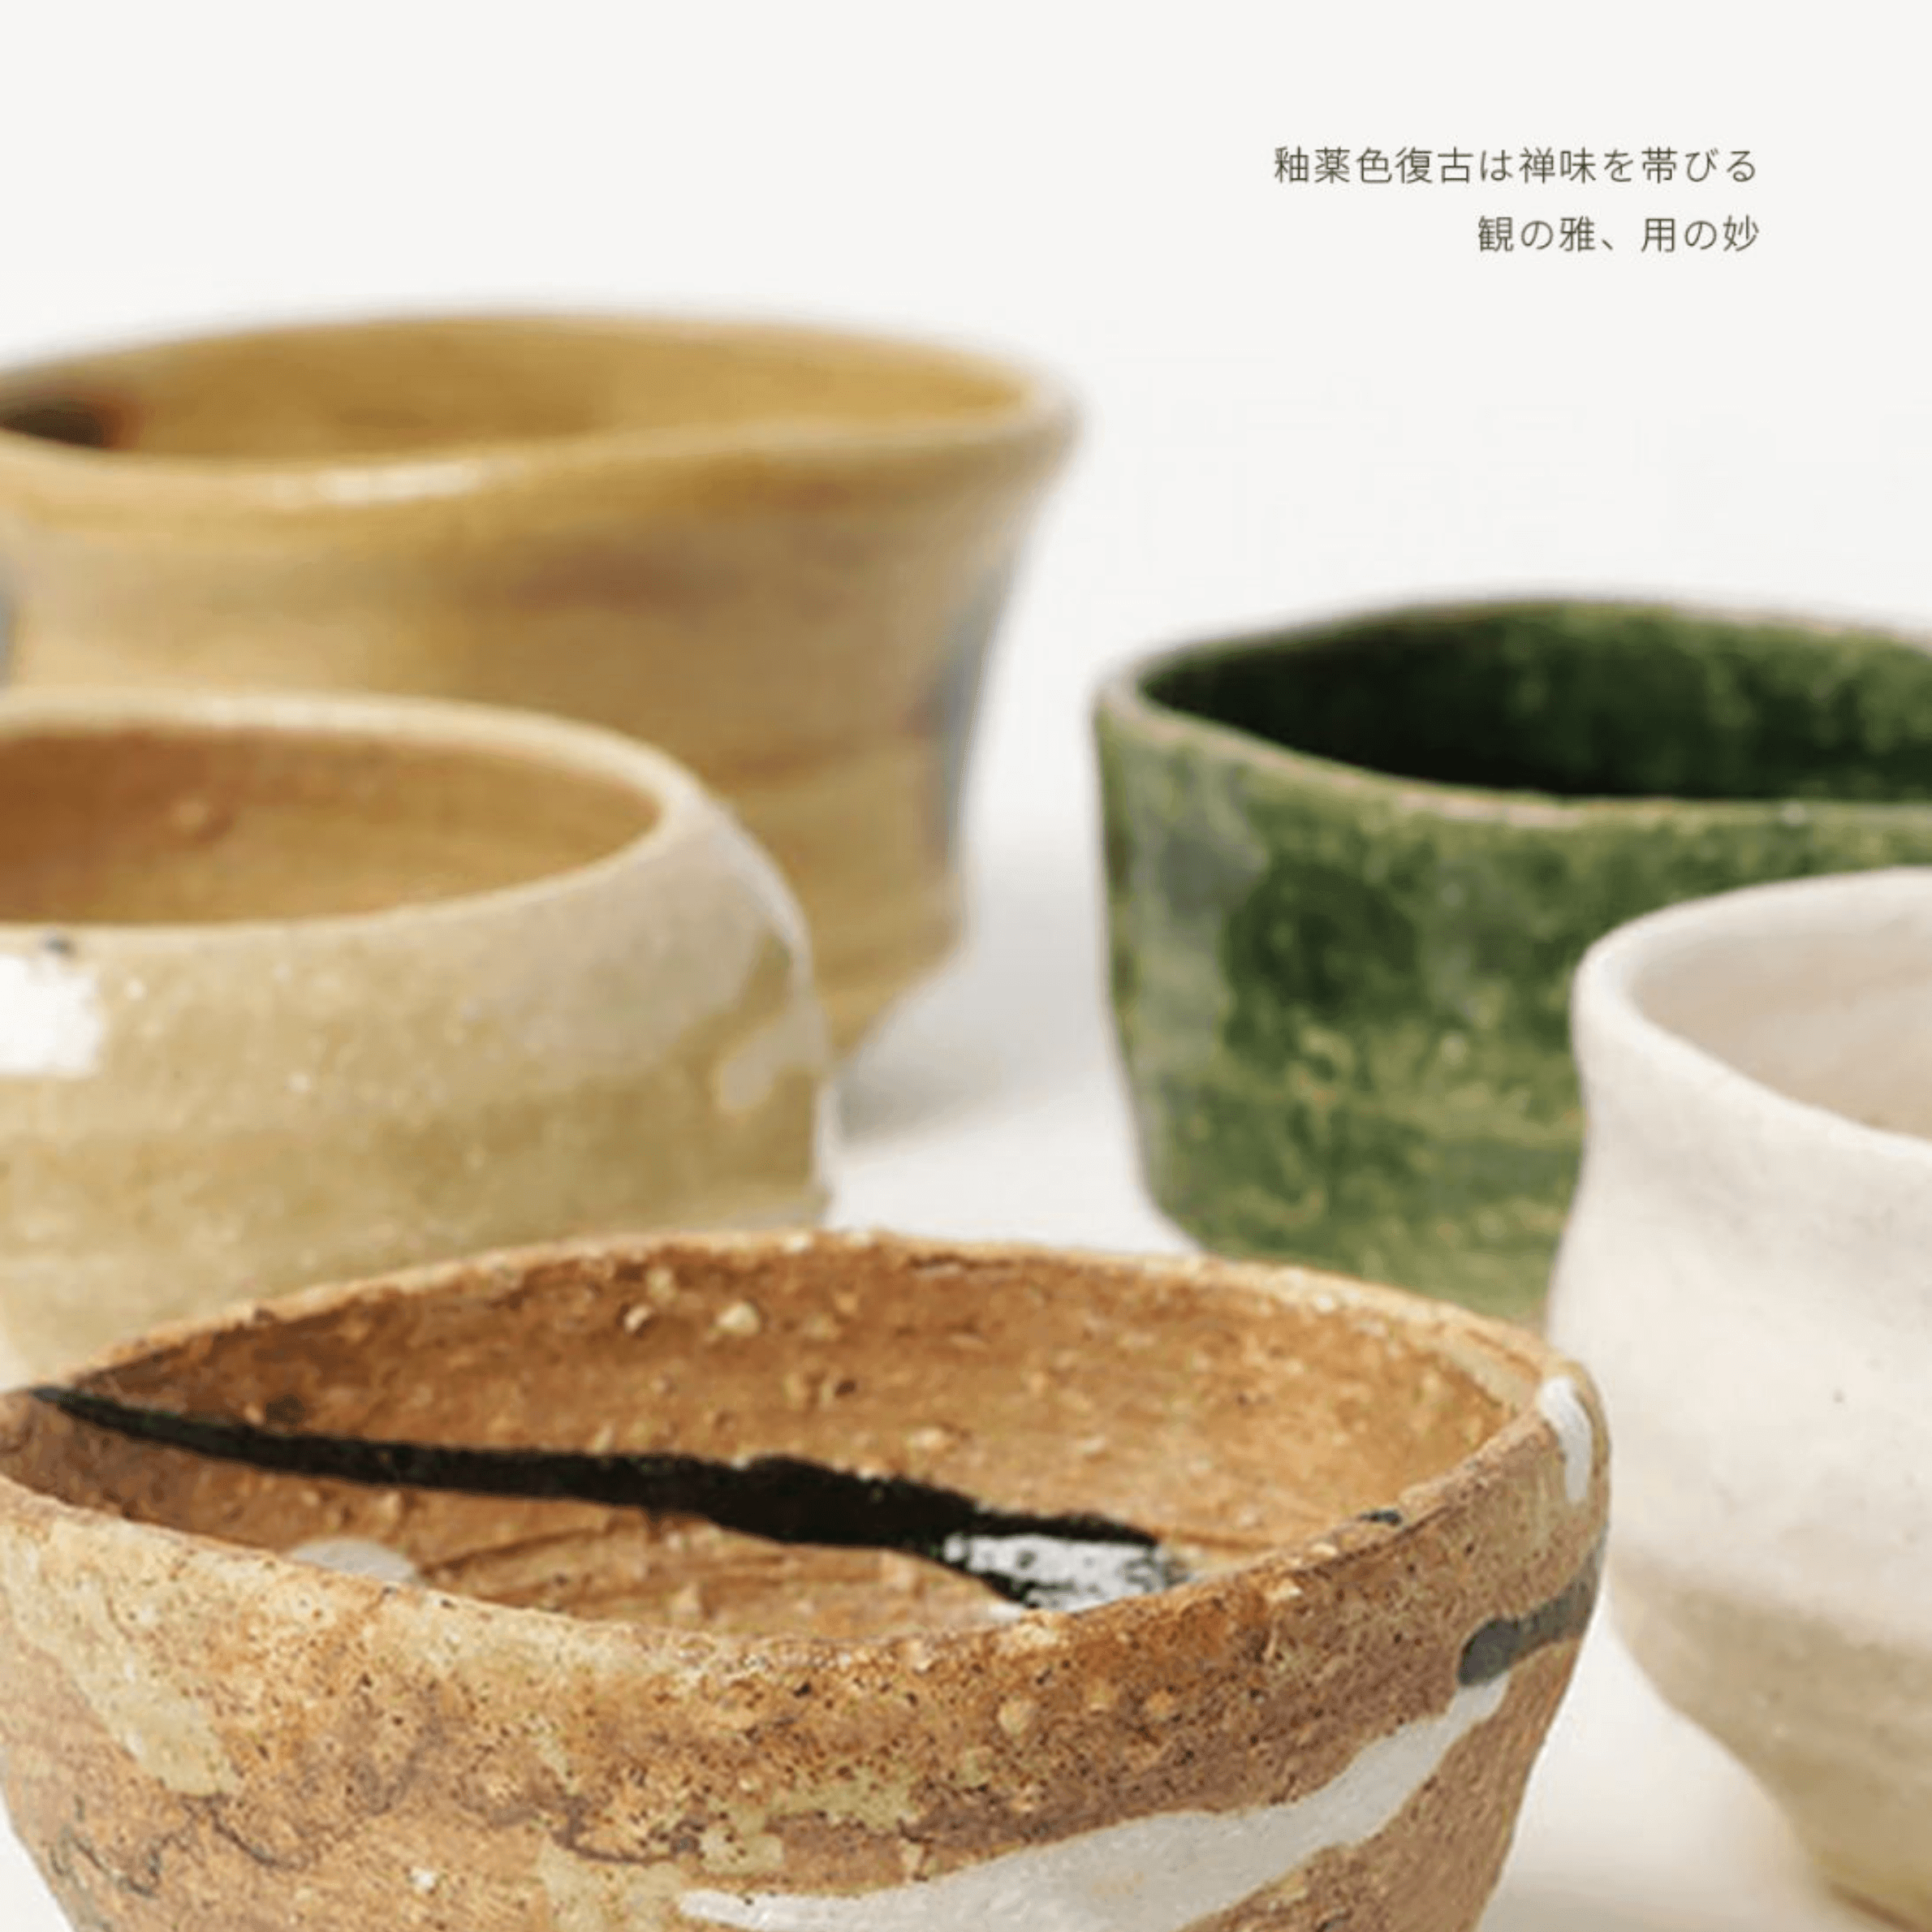 Awasaka Handcrafted Coarse Ceramic Tea Cup/Mini Plate Set - MASU